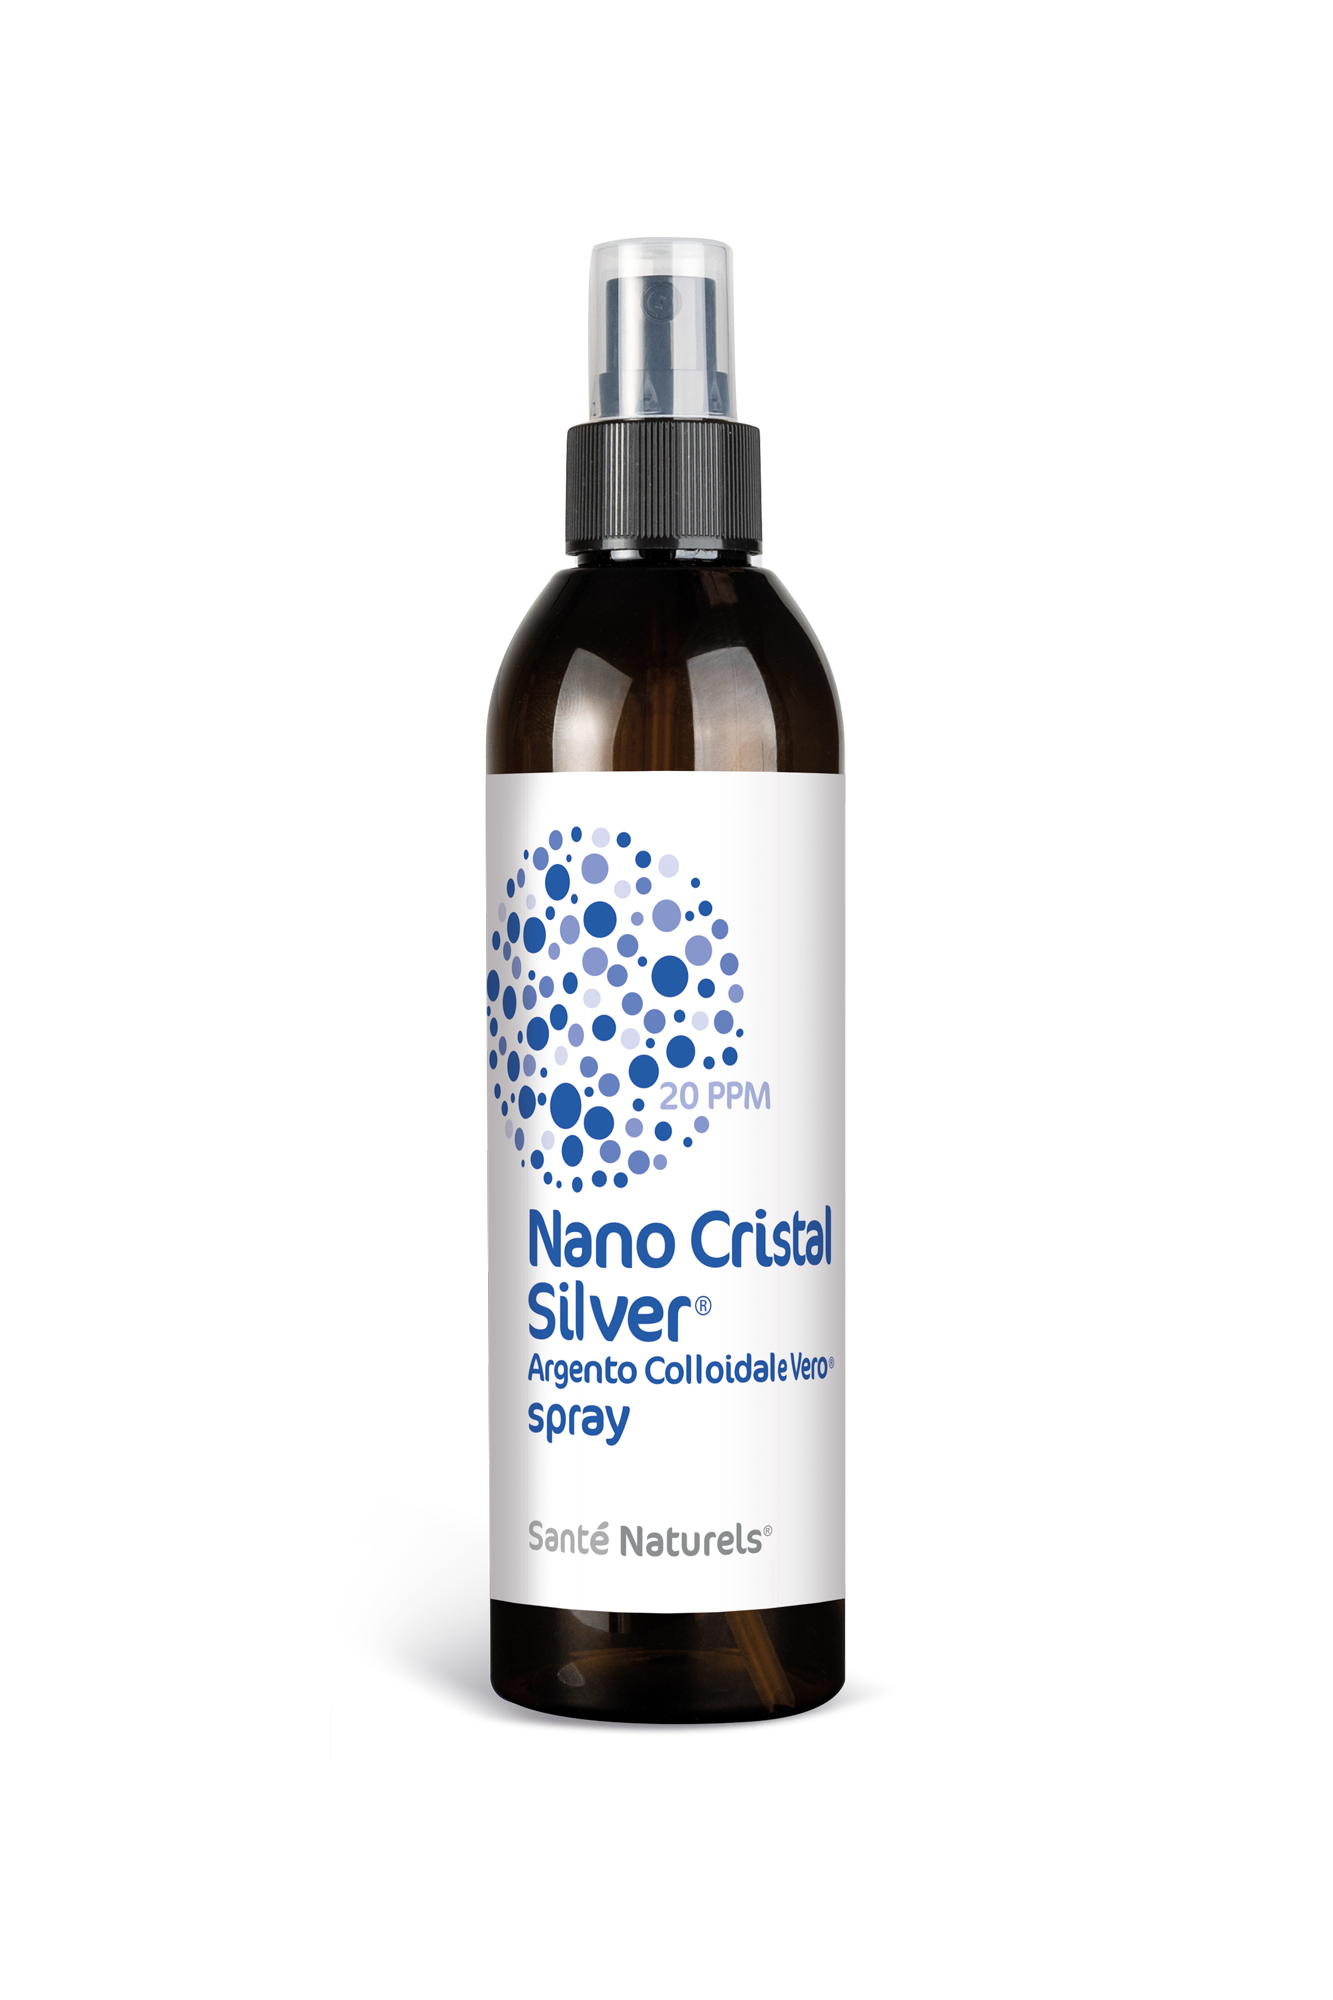 Colloidal Silver Vero® Nano Cristal Silver® 20 ppm 500 ml THE MOST ECONOMICAL CHOICE 